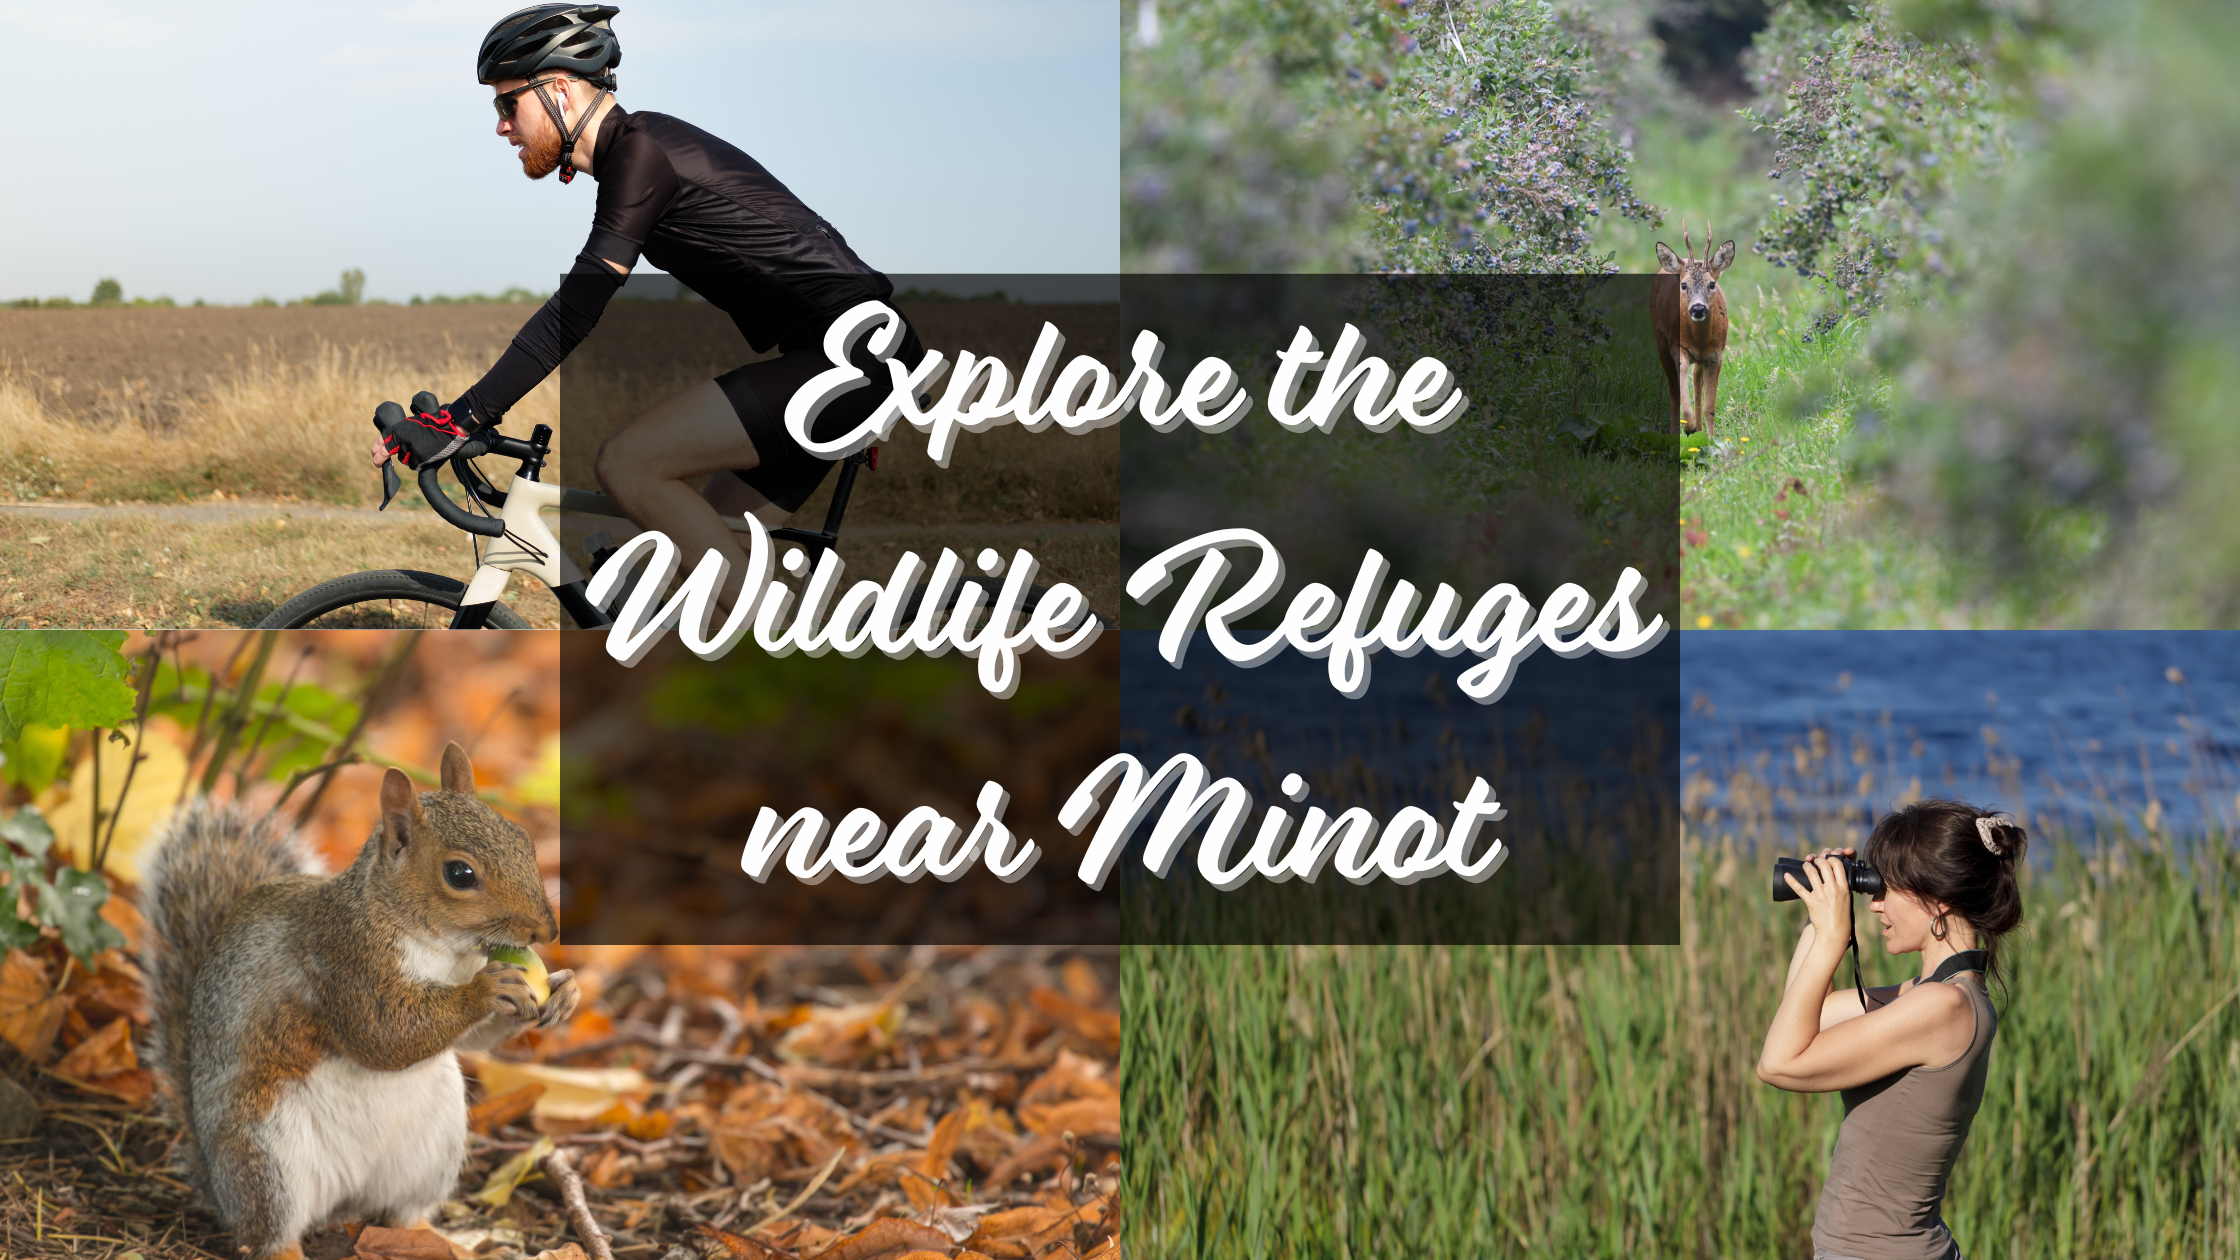 Explore Wildlife Refuges near minot